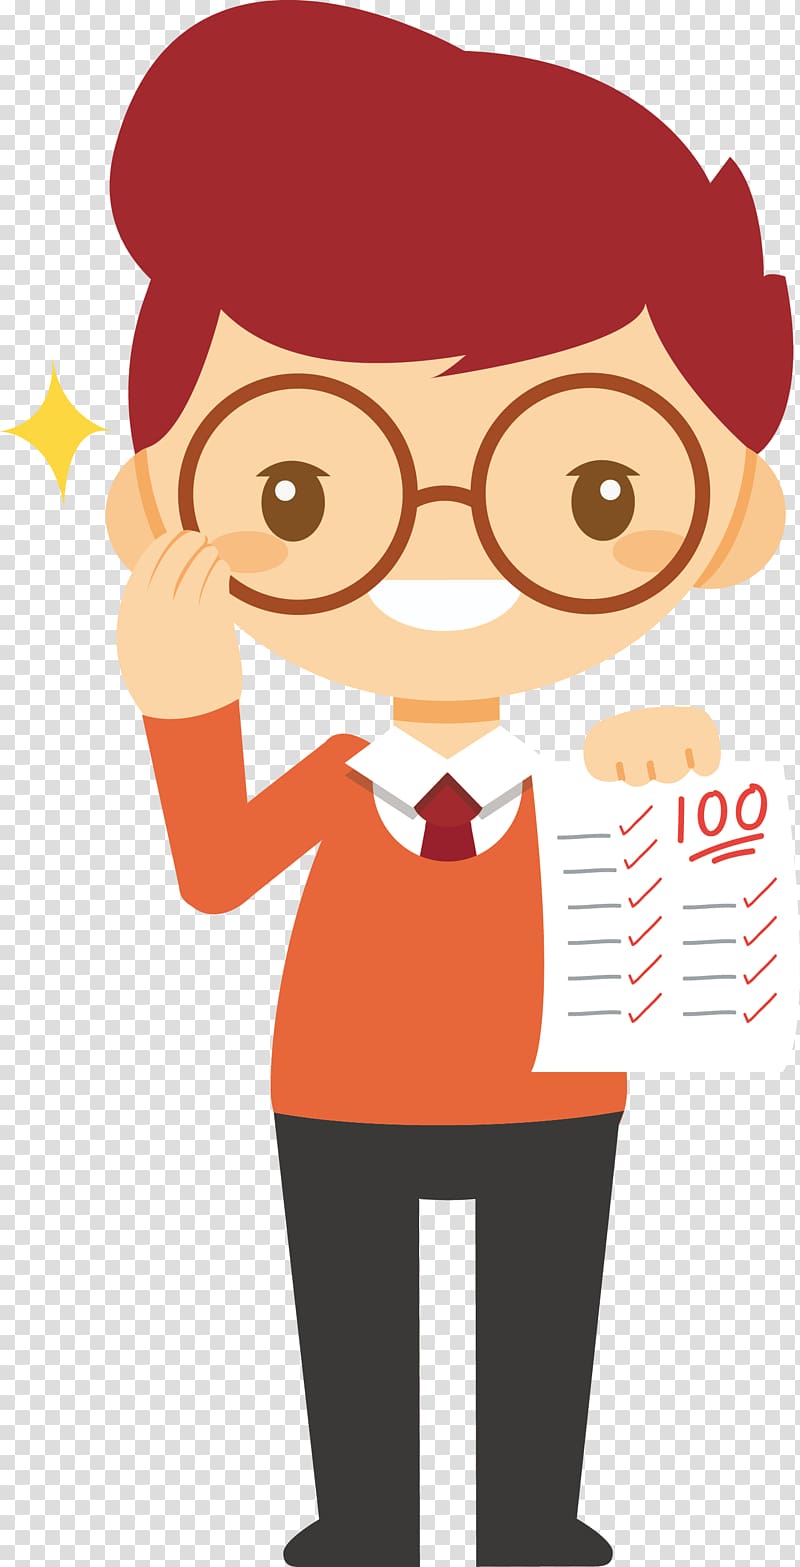 Teacher Adobe Illustrator Education Illustration, A cartoon man wearing glasses transparent background PNG clipart